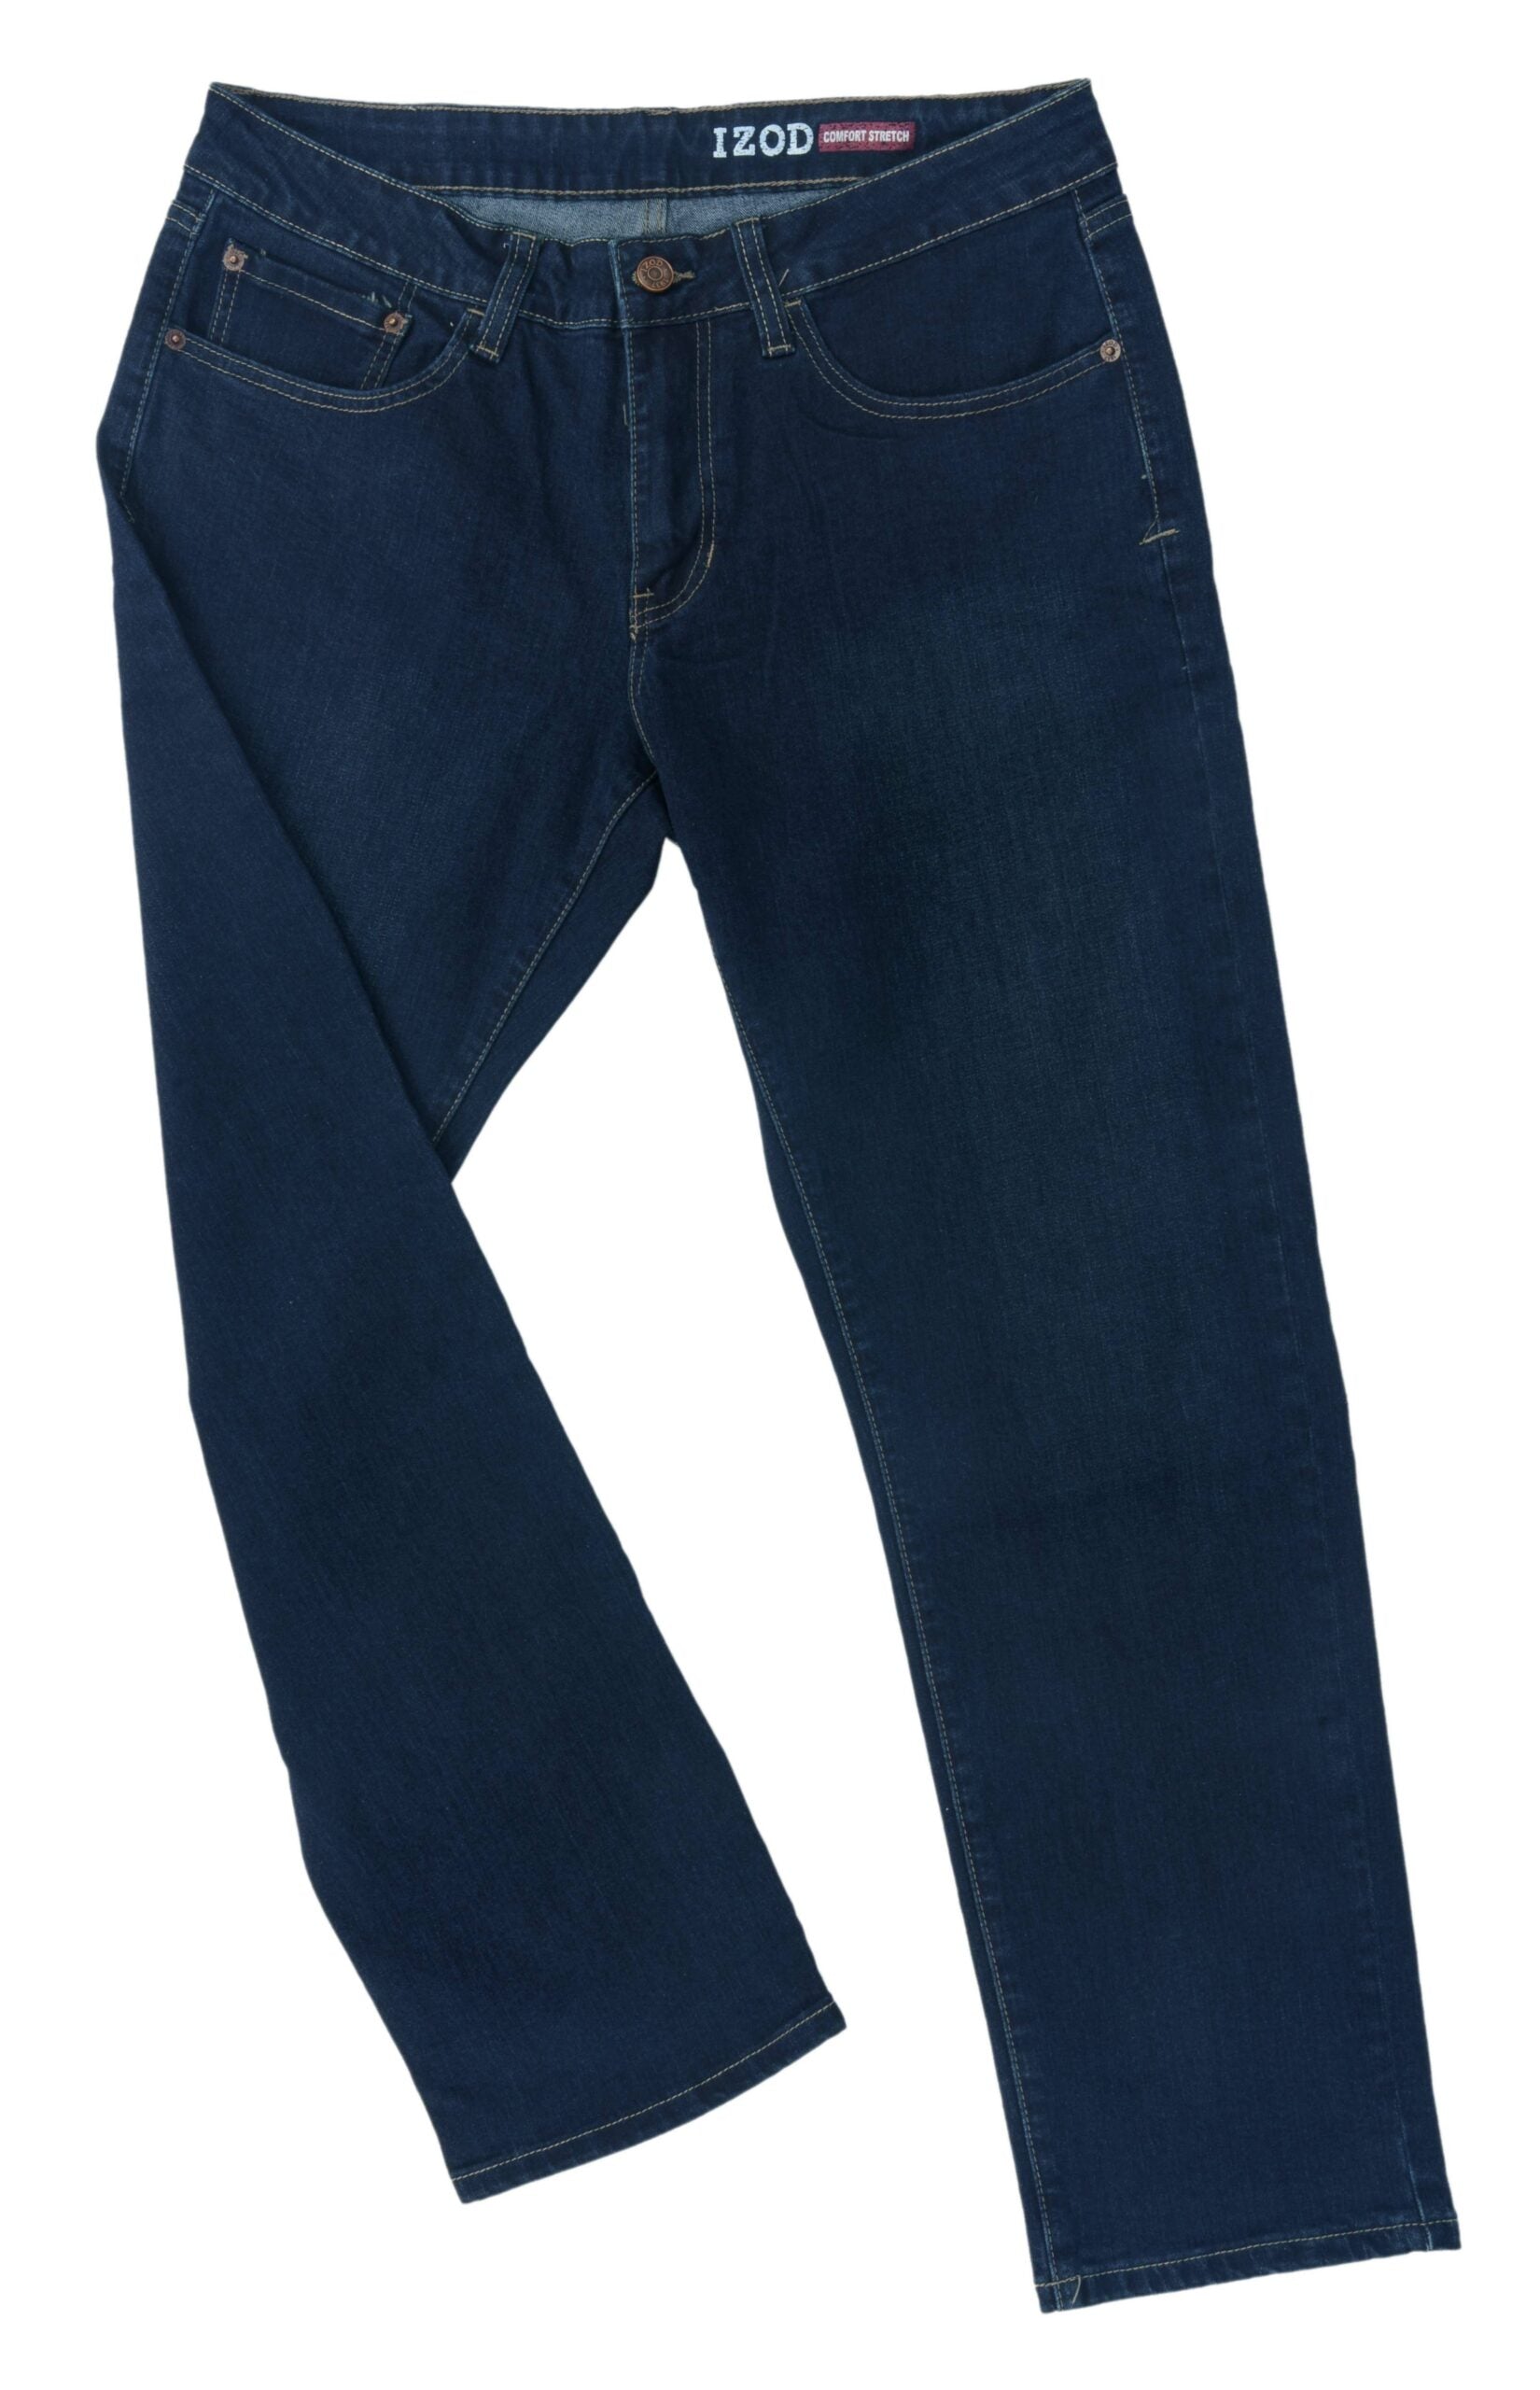 IZOD Men's Comfort Stretch Straight Leg Jean (Dark, 32x30)